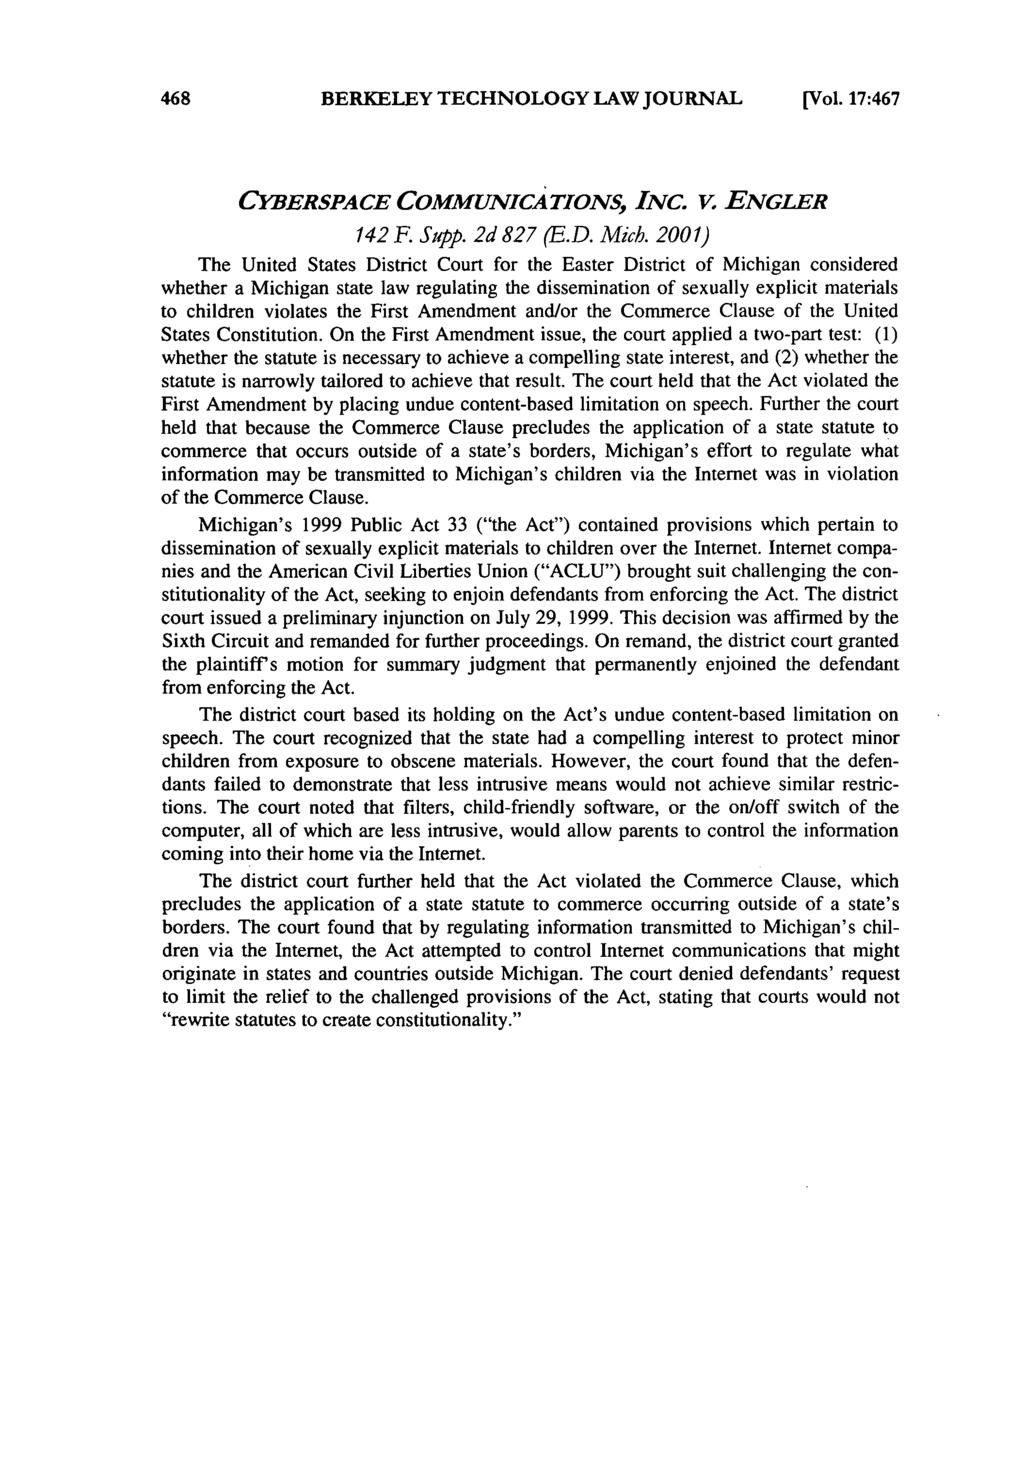 BERKELEY TECHNOLOGY LAW JOURNAL [Vol. 17:467 CYBERSPACE COMMUNICATIONS, 142 F. Sypp. 2d 827 (E.D. Mich. 2001) INC. v.